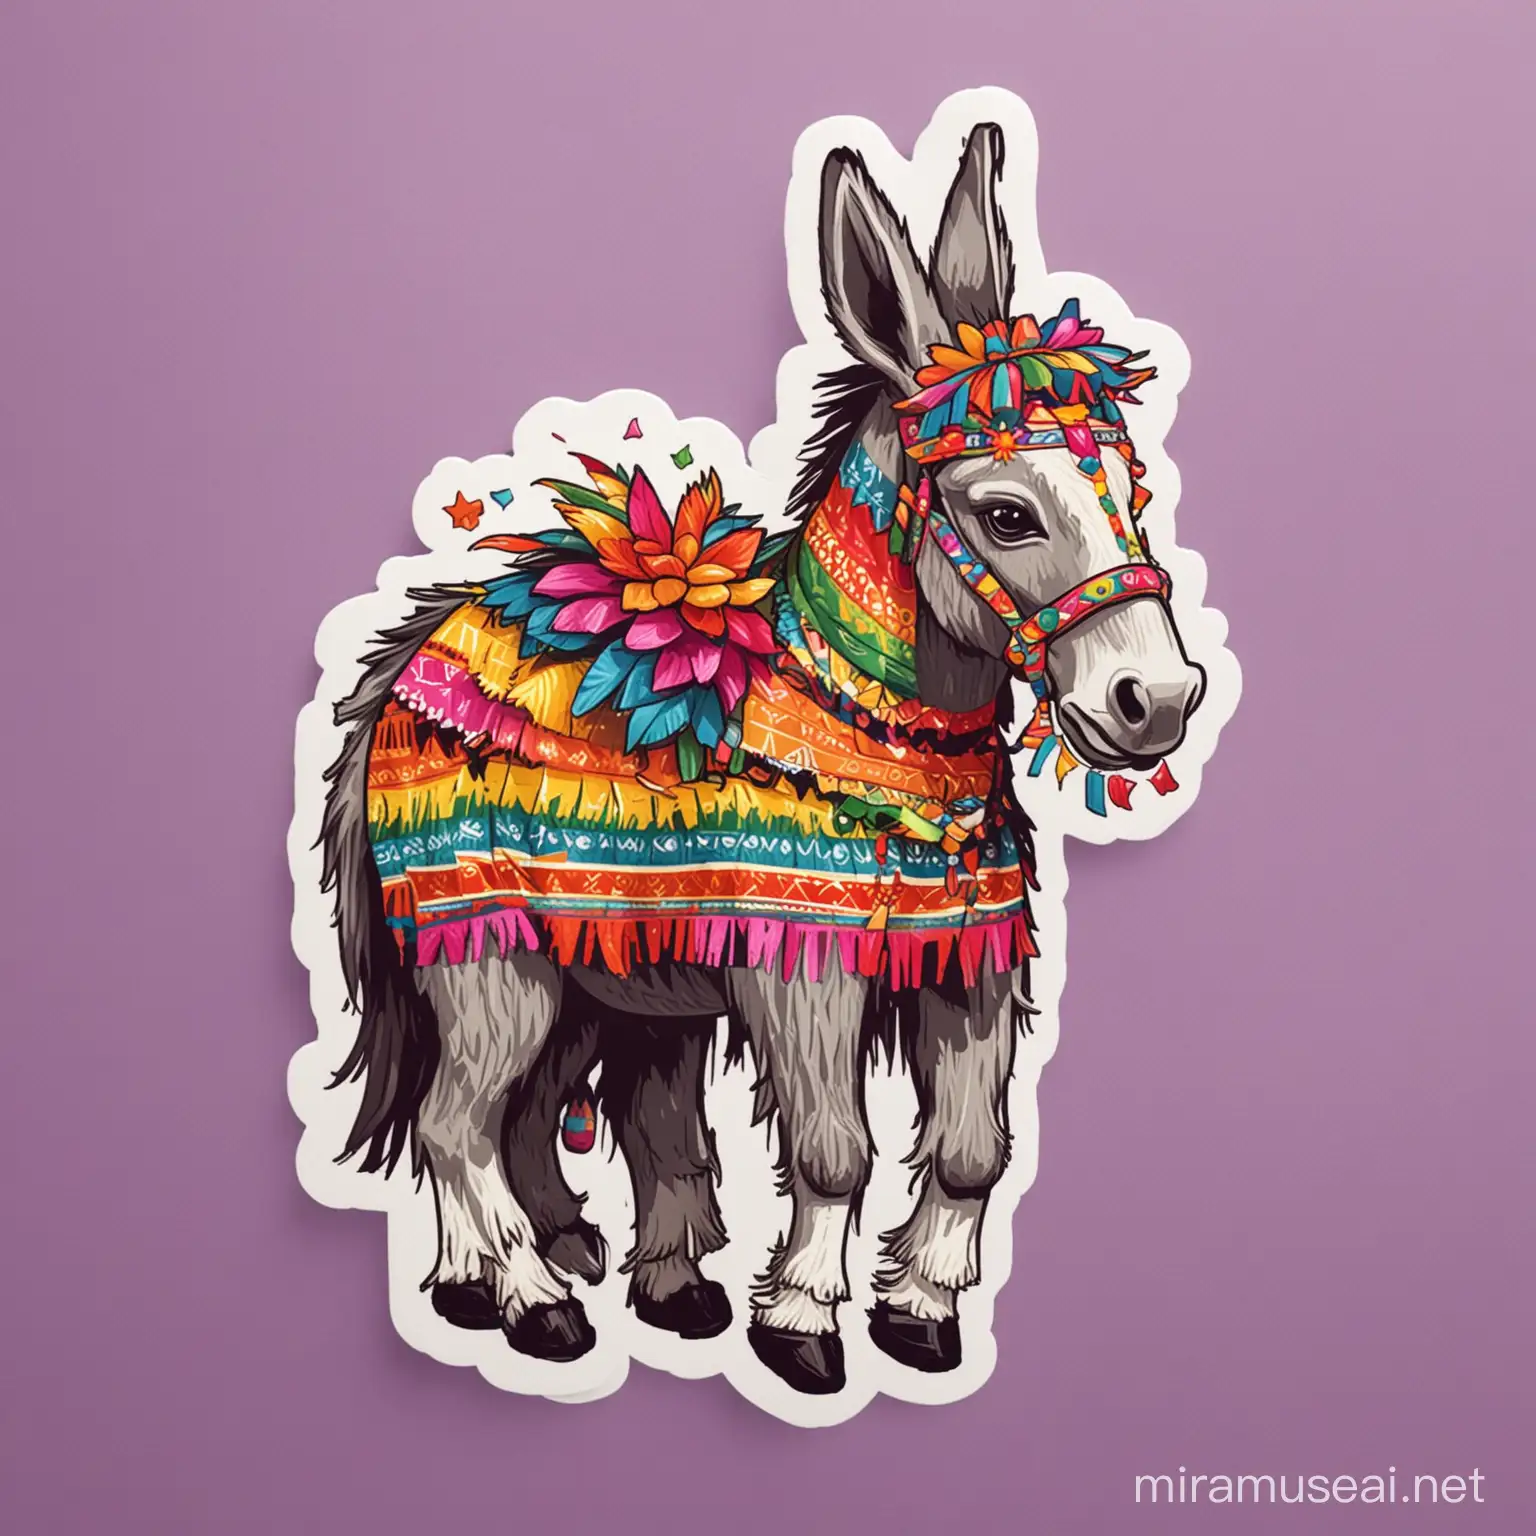 Cinco de Mayo Celebration Colorful Mexican Donkey Piata on Retro Groovy White Background Sticker